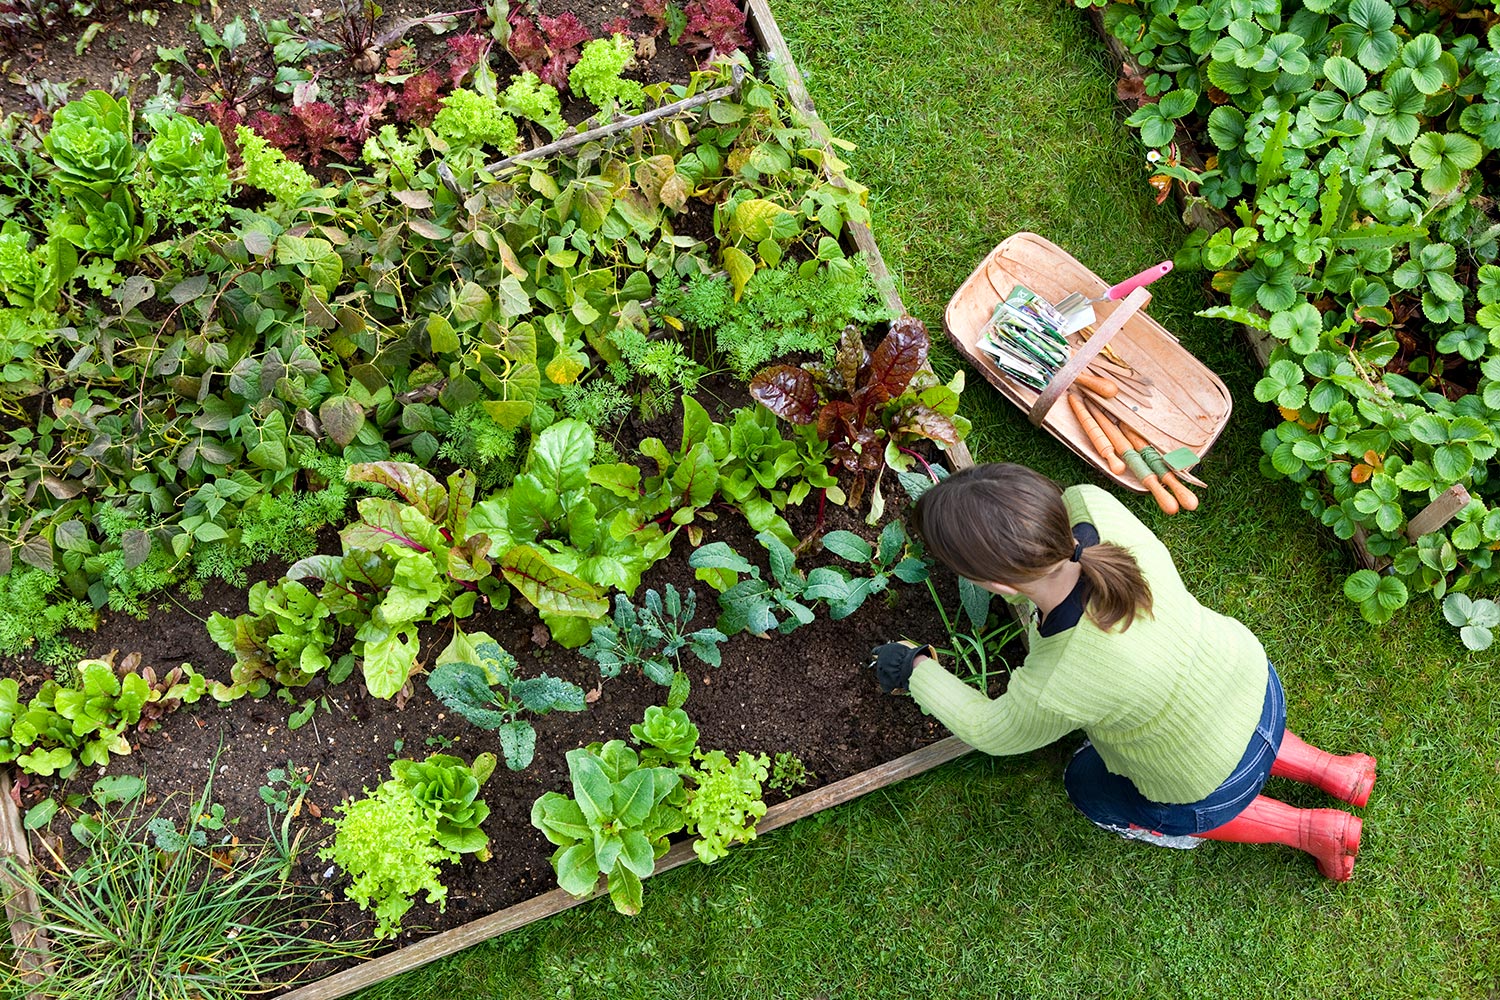 Gardener weeding an organic vegetable garden with a hand fork,